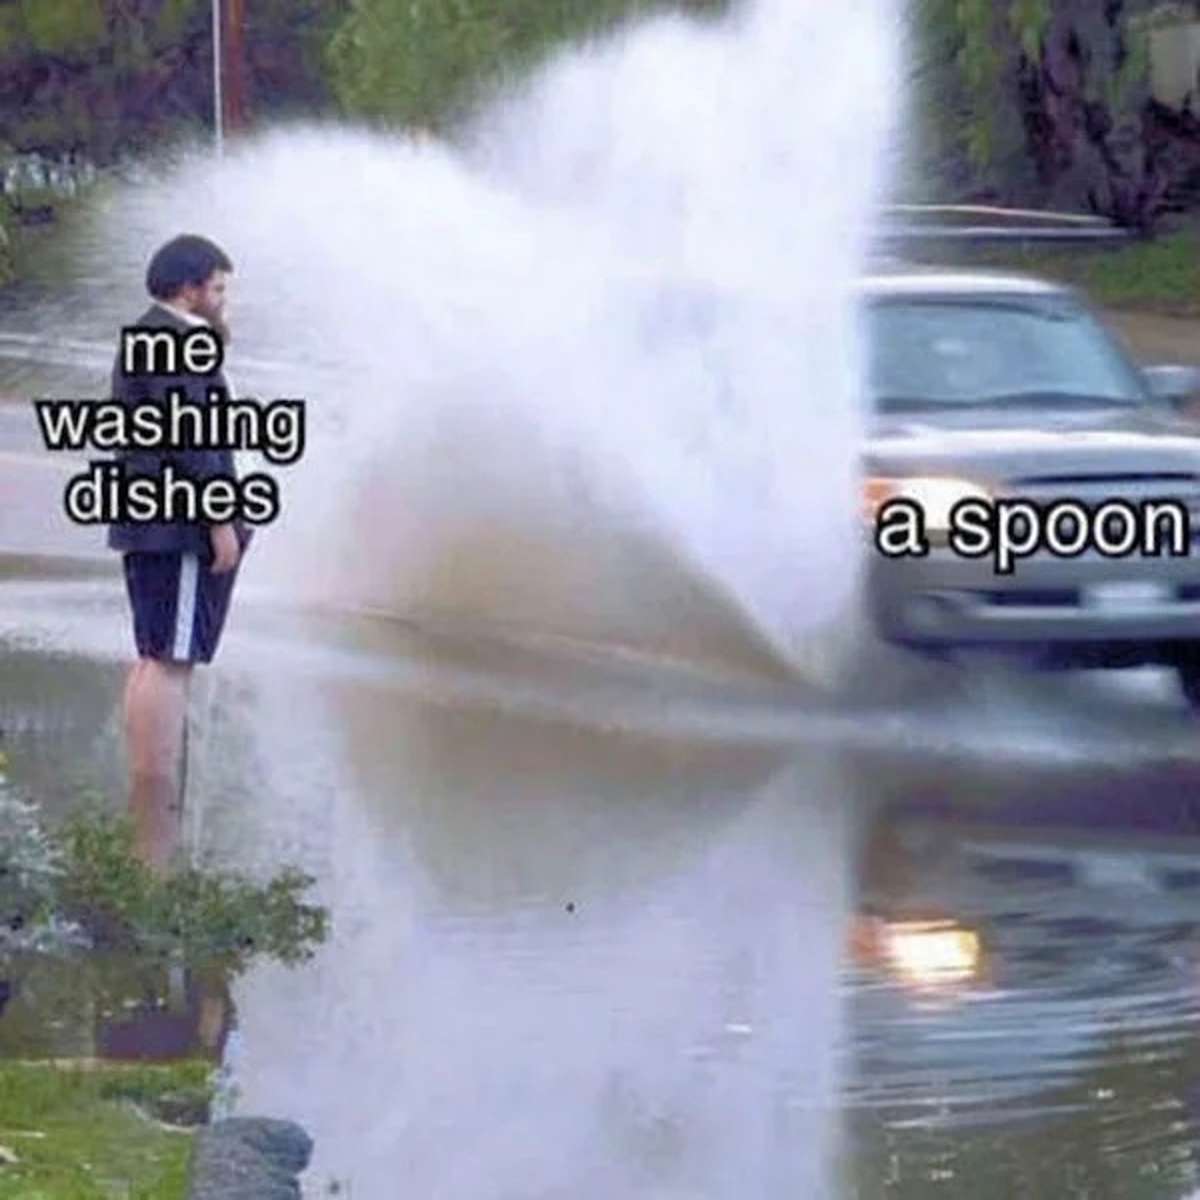 fresh memes - car - me washing dishes E a spoon